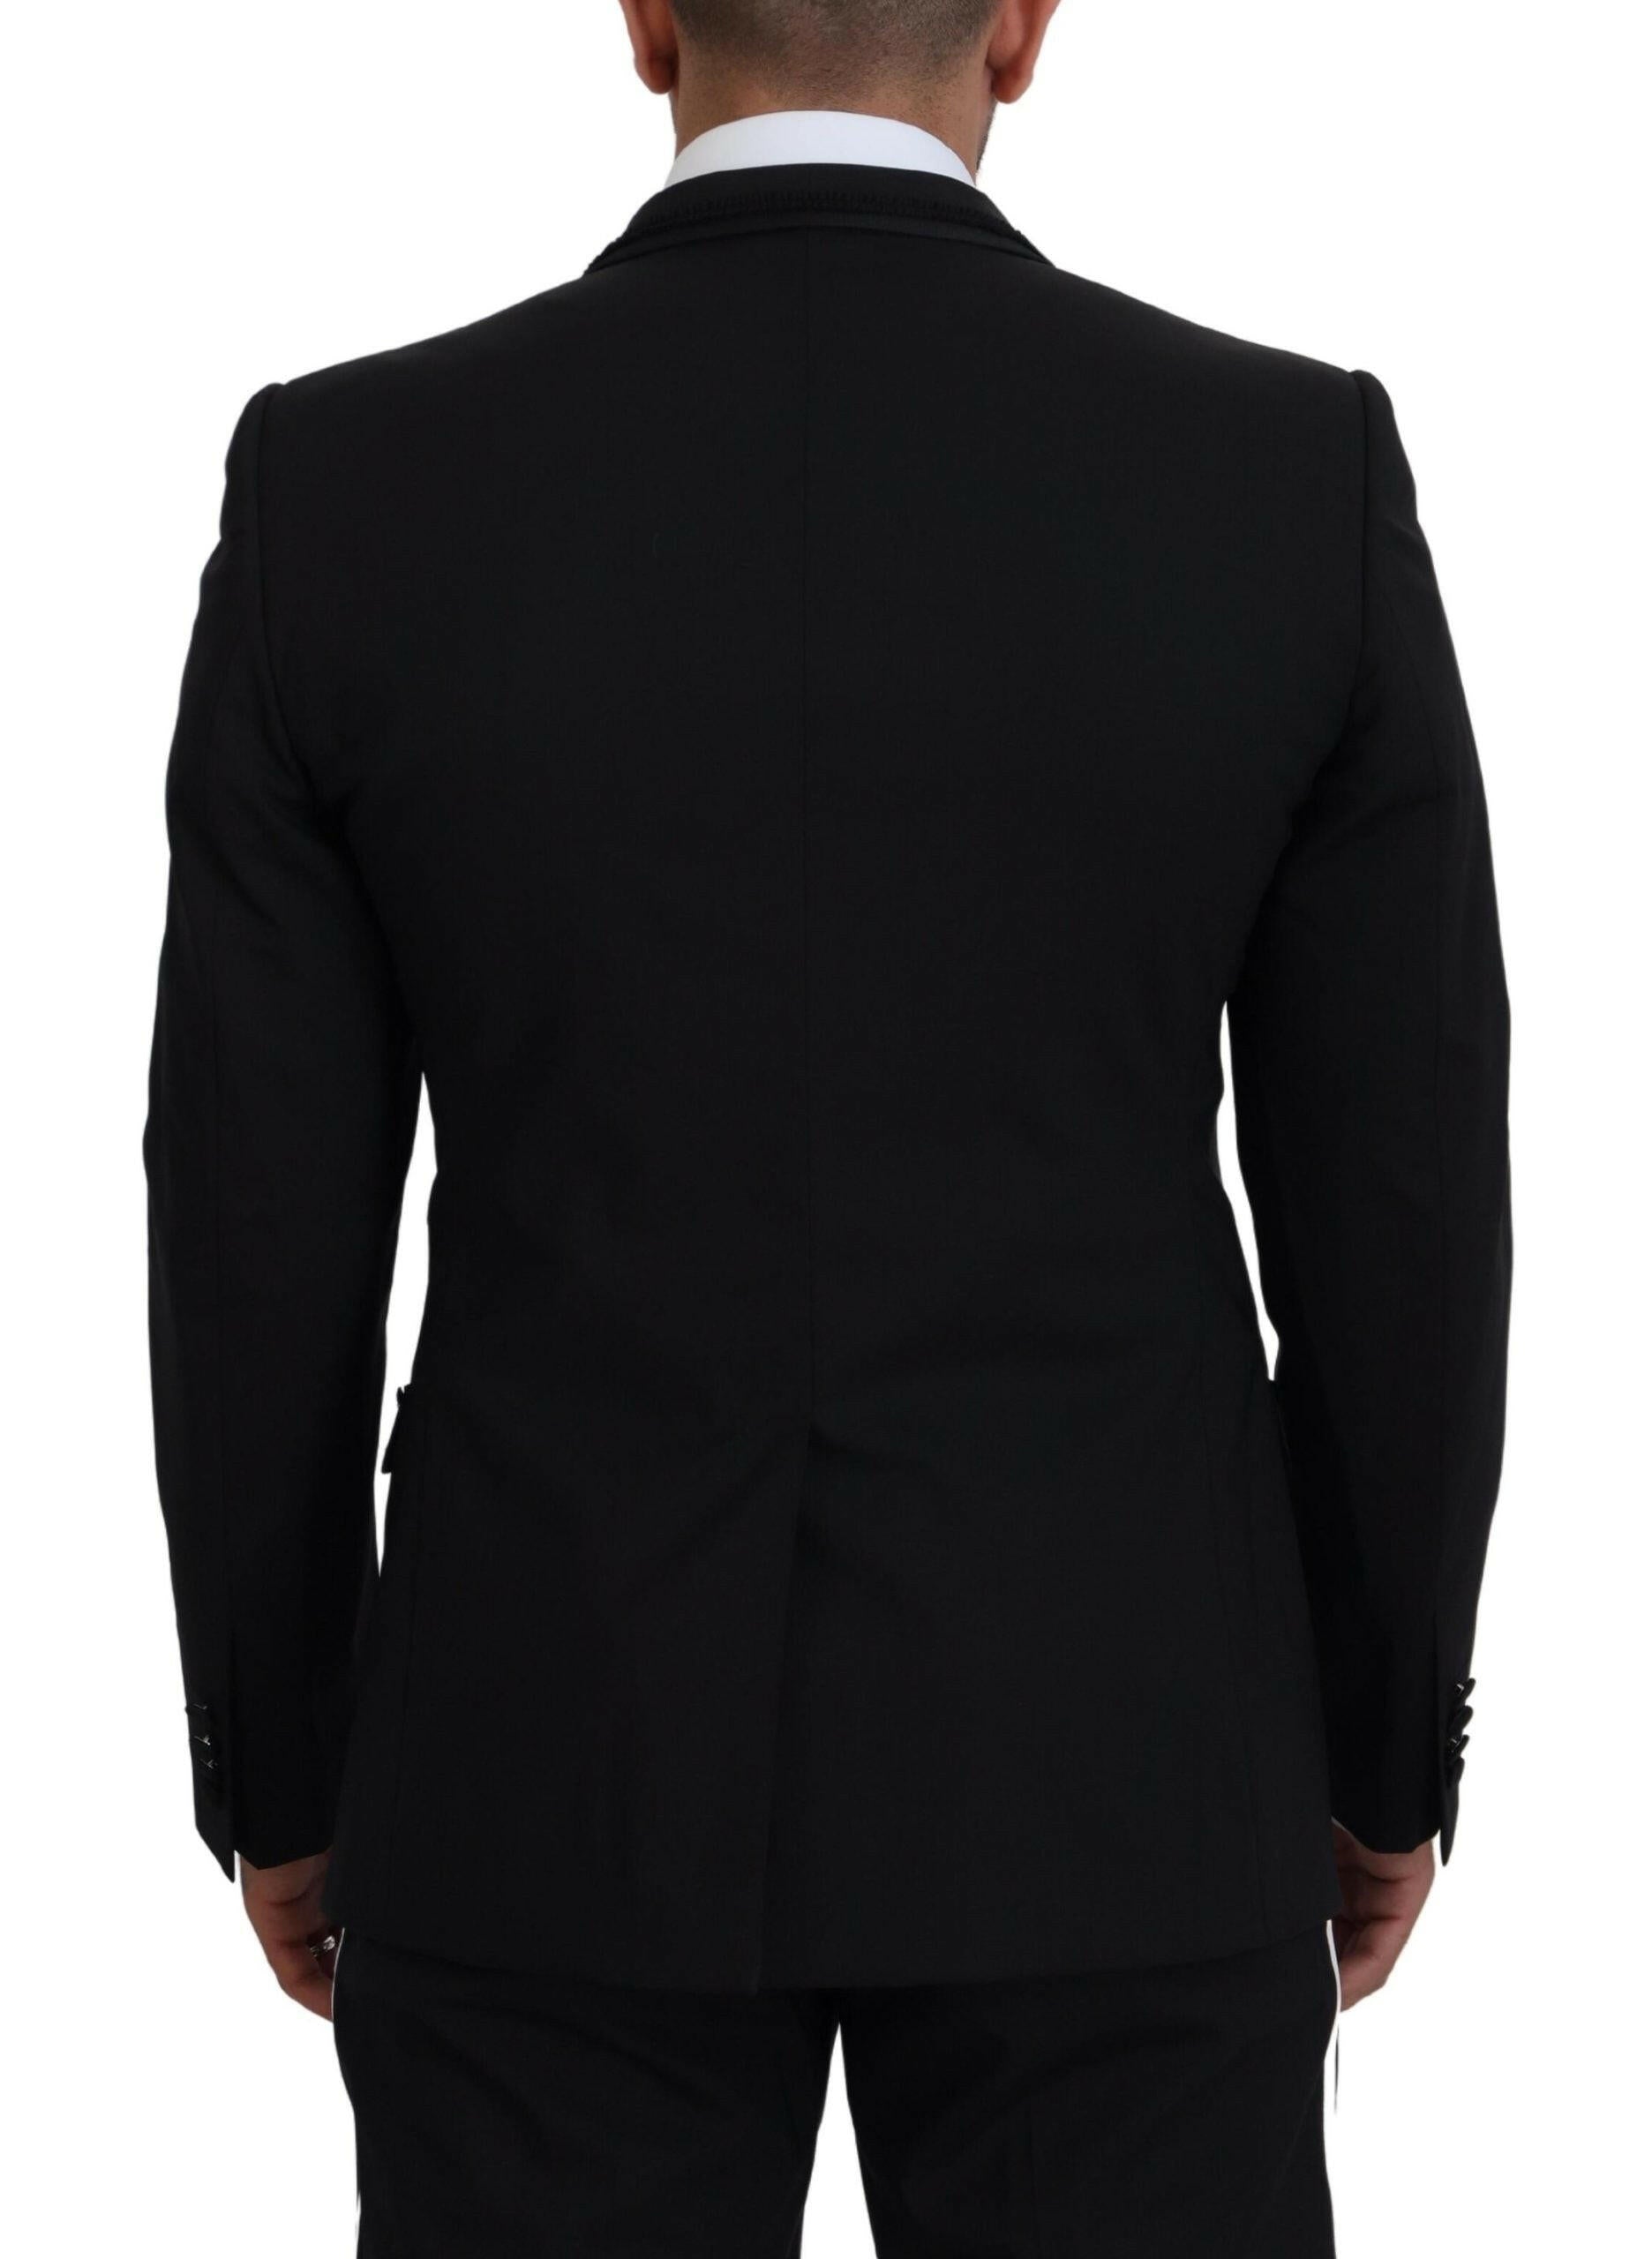 Dolce & Gabbana Black MARTINI Slim Fit Jacket Blazer - GENUINE AUTHENTIC BRAND LLC  